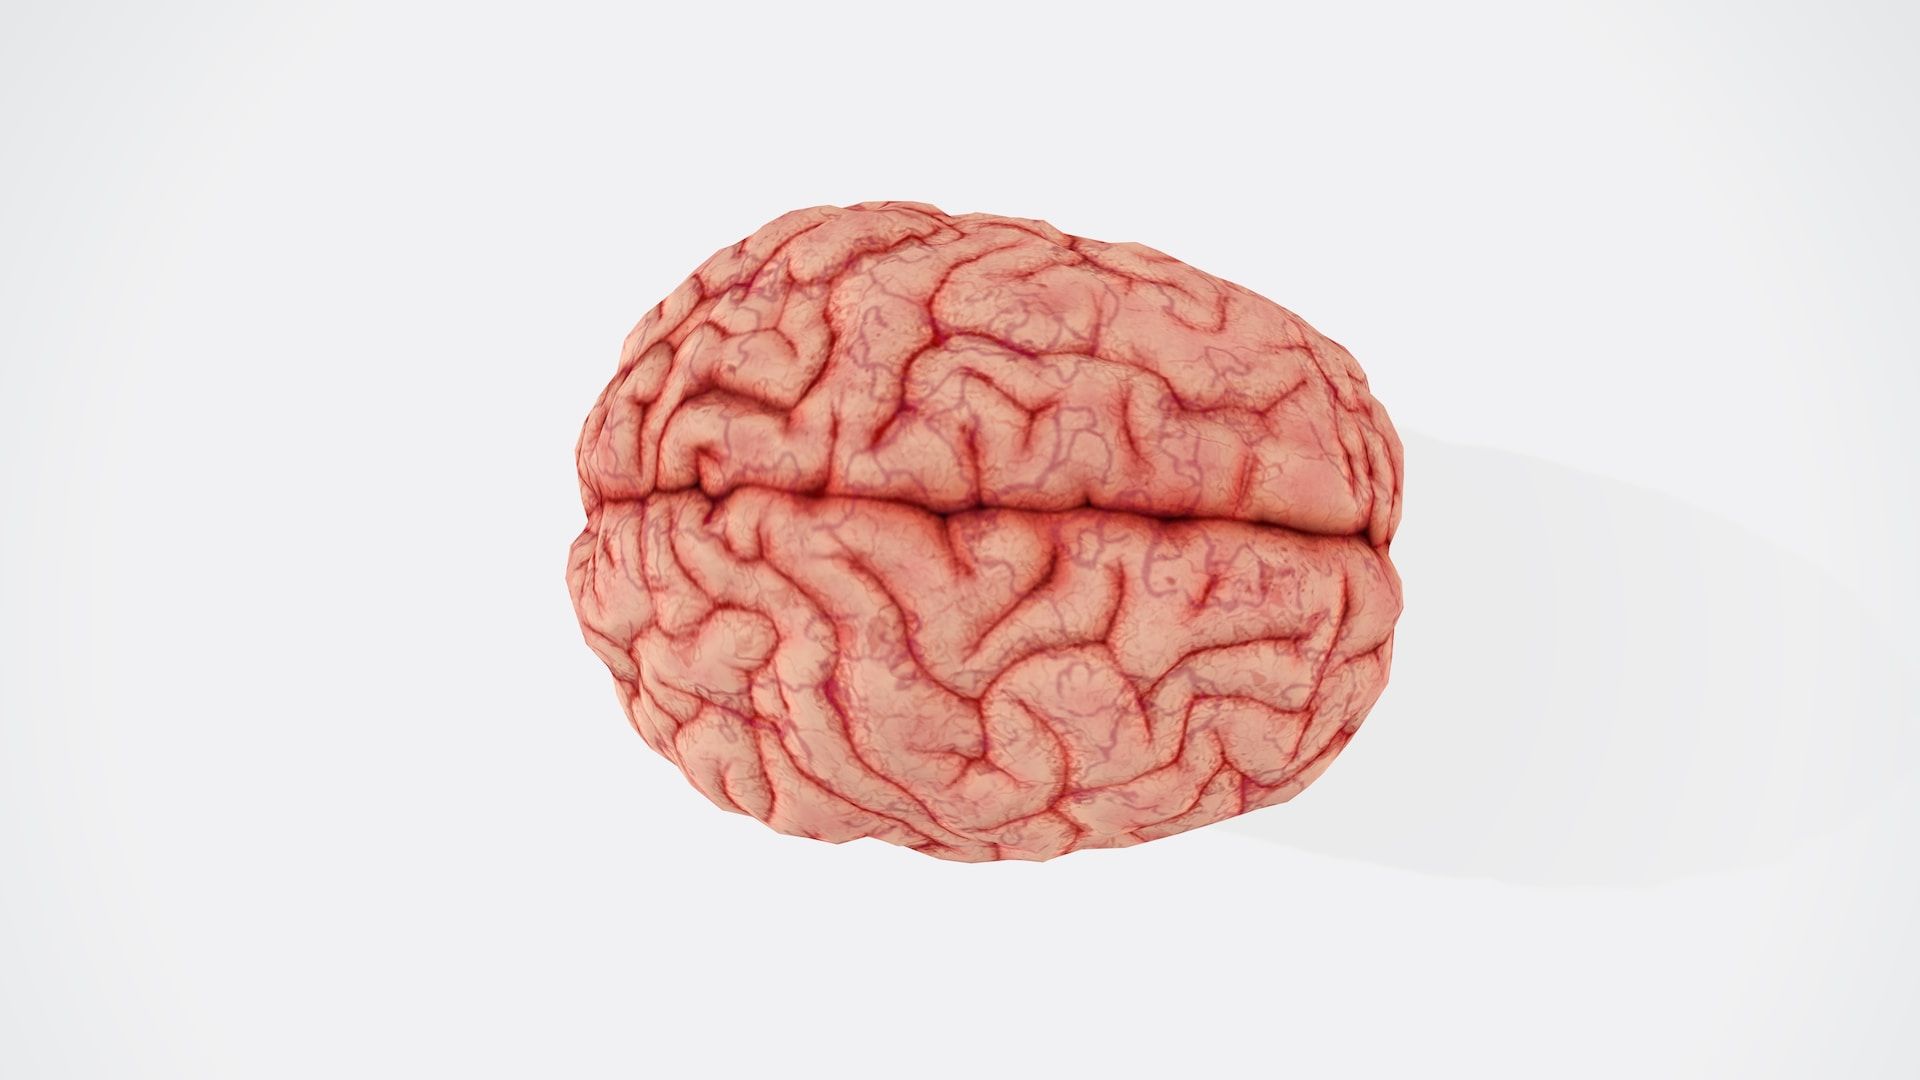 Мозок